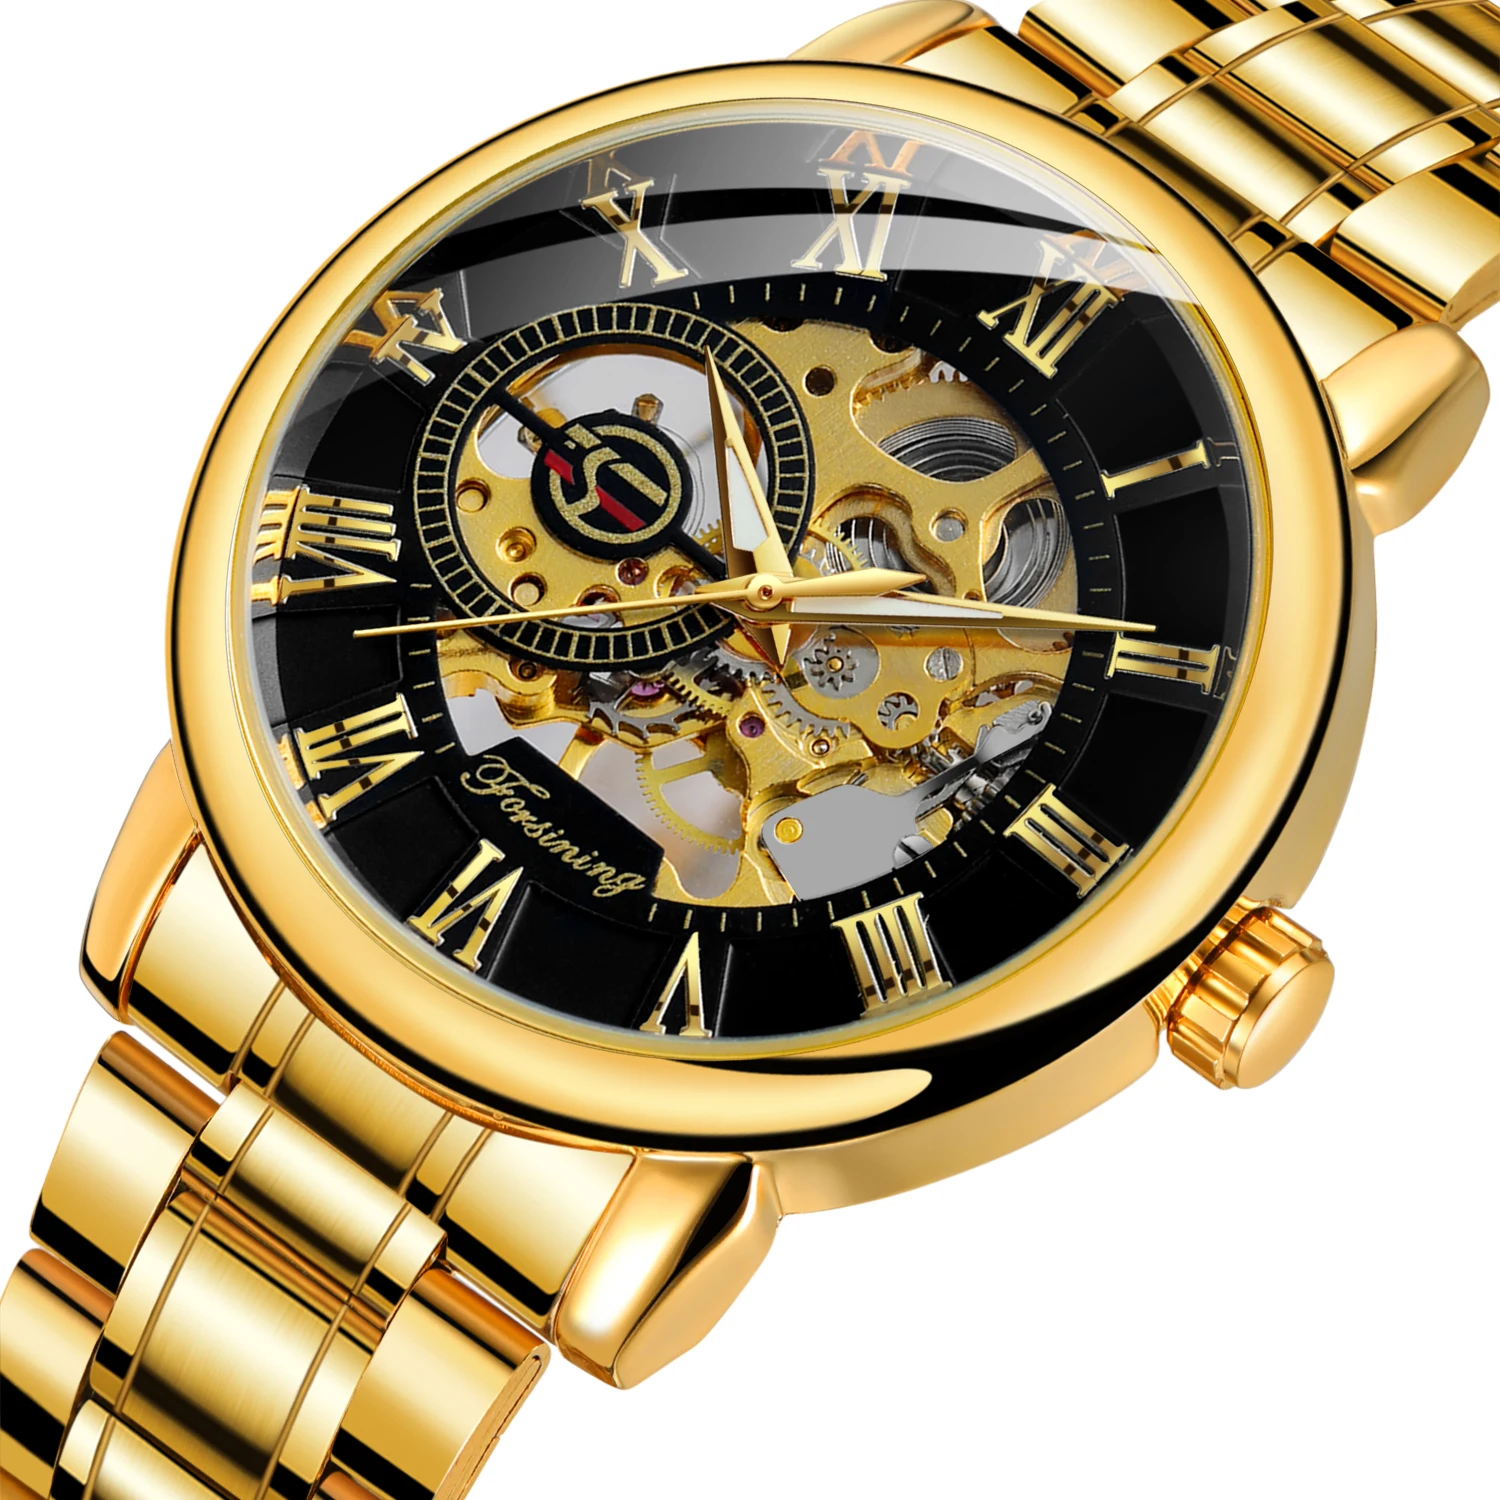 
FORSINING Fashion Business Luminous Wrist Watches Stainless Steel Band Male Luxury Custom Skeleton Mechanical Watch 